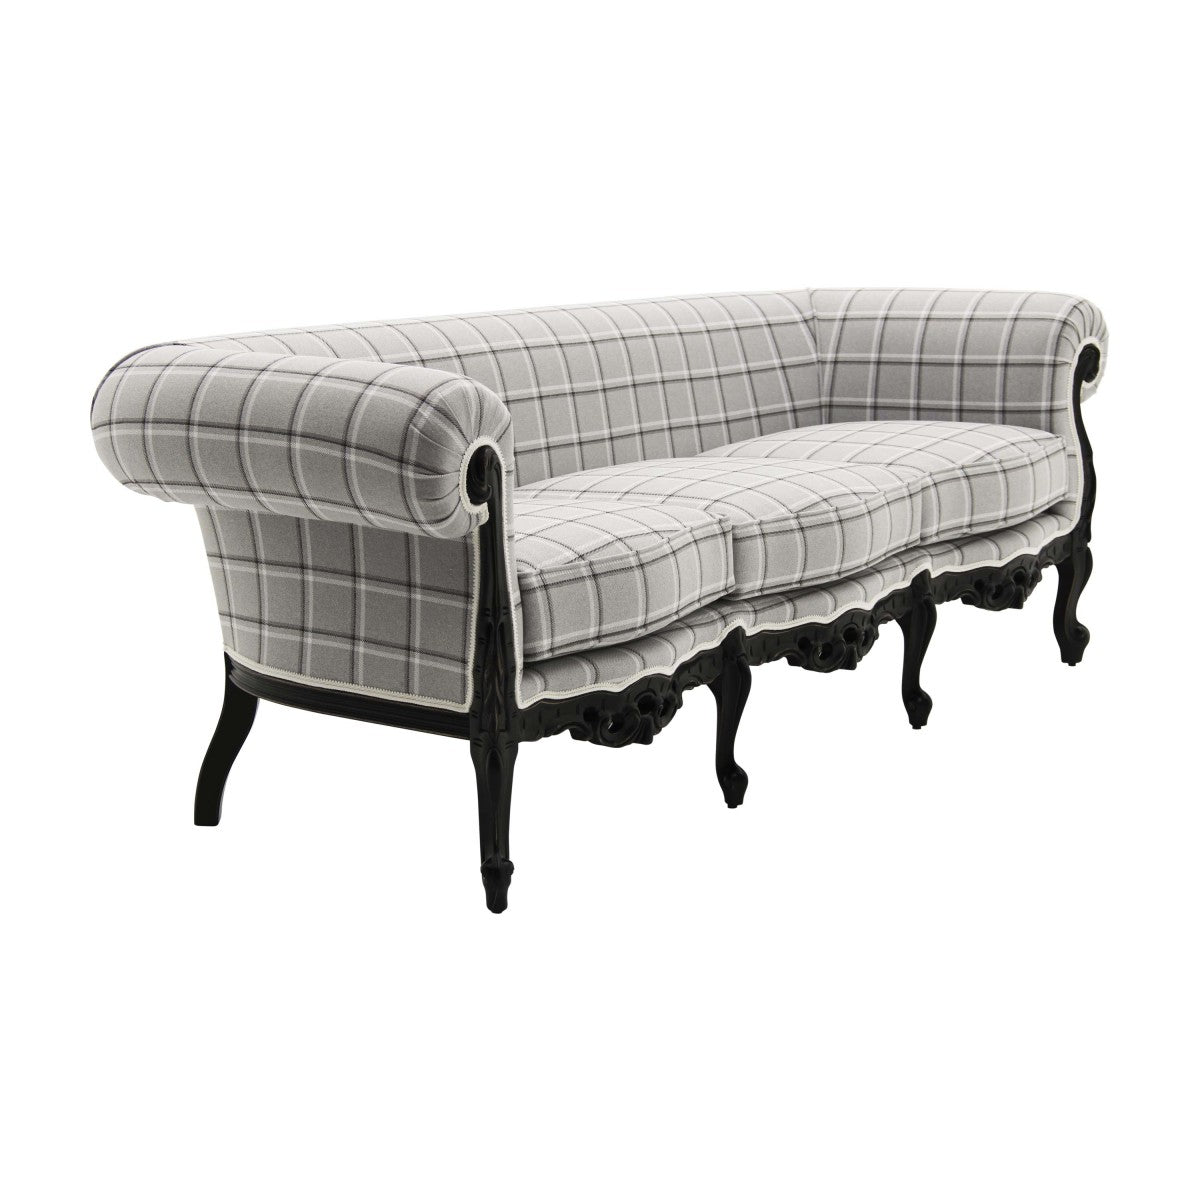 Febo Bespoke Upholstered Baroque Style Three Seater Sofa MS9100E Custom Made To Order